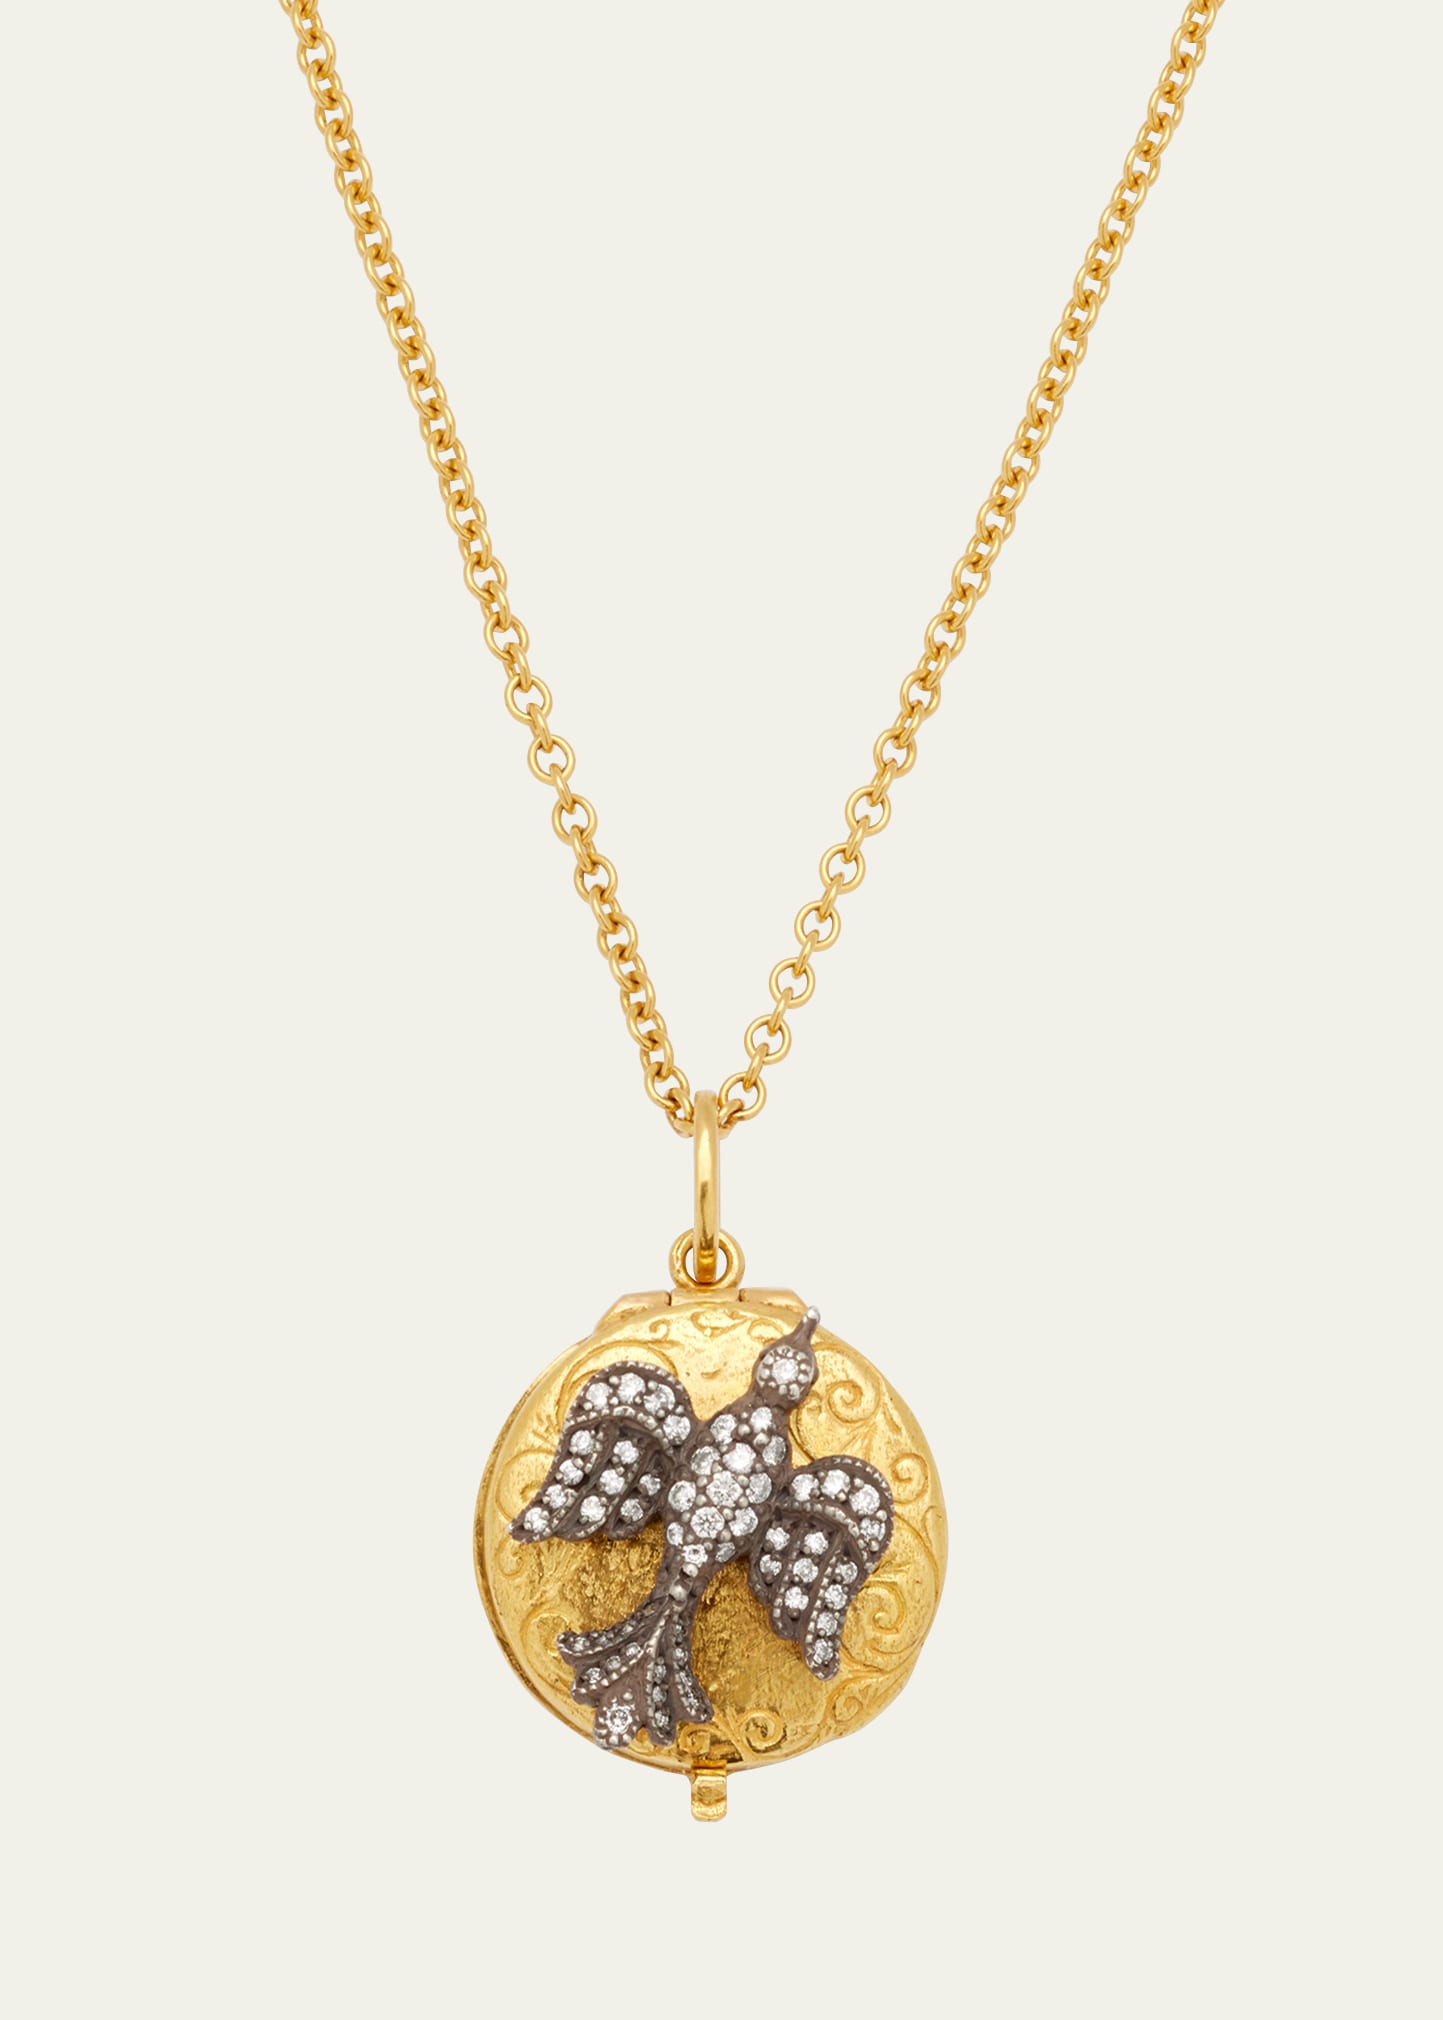 Arman Sarkisyan Small Bird Locket Necklace with Diamonds